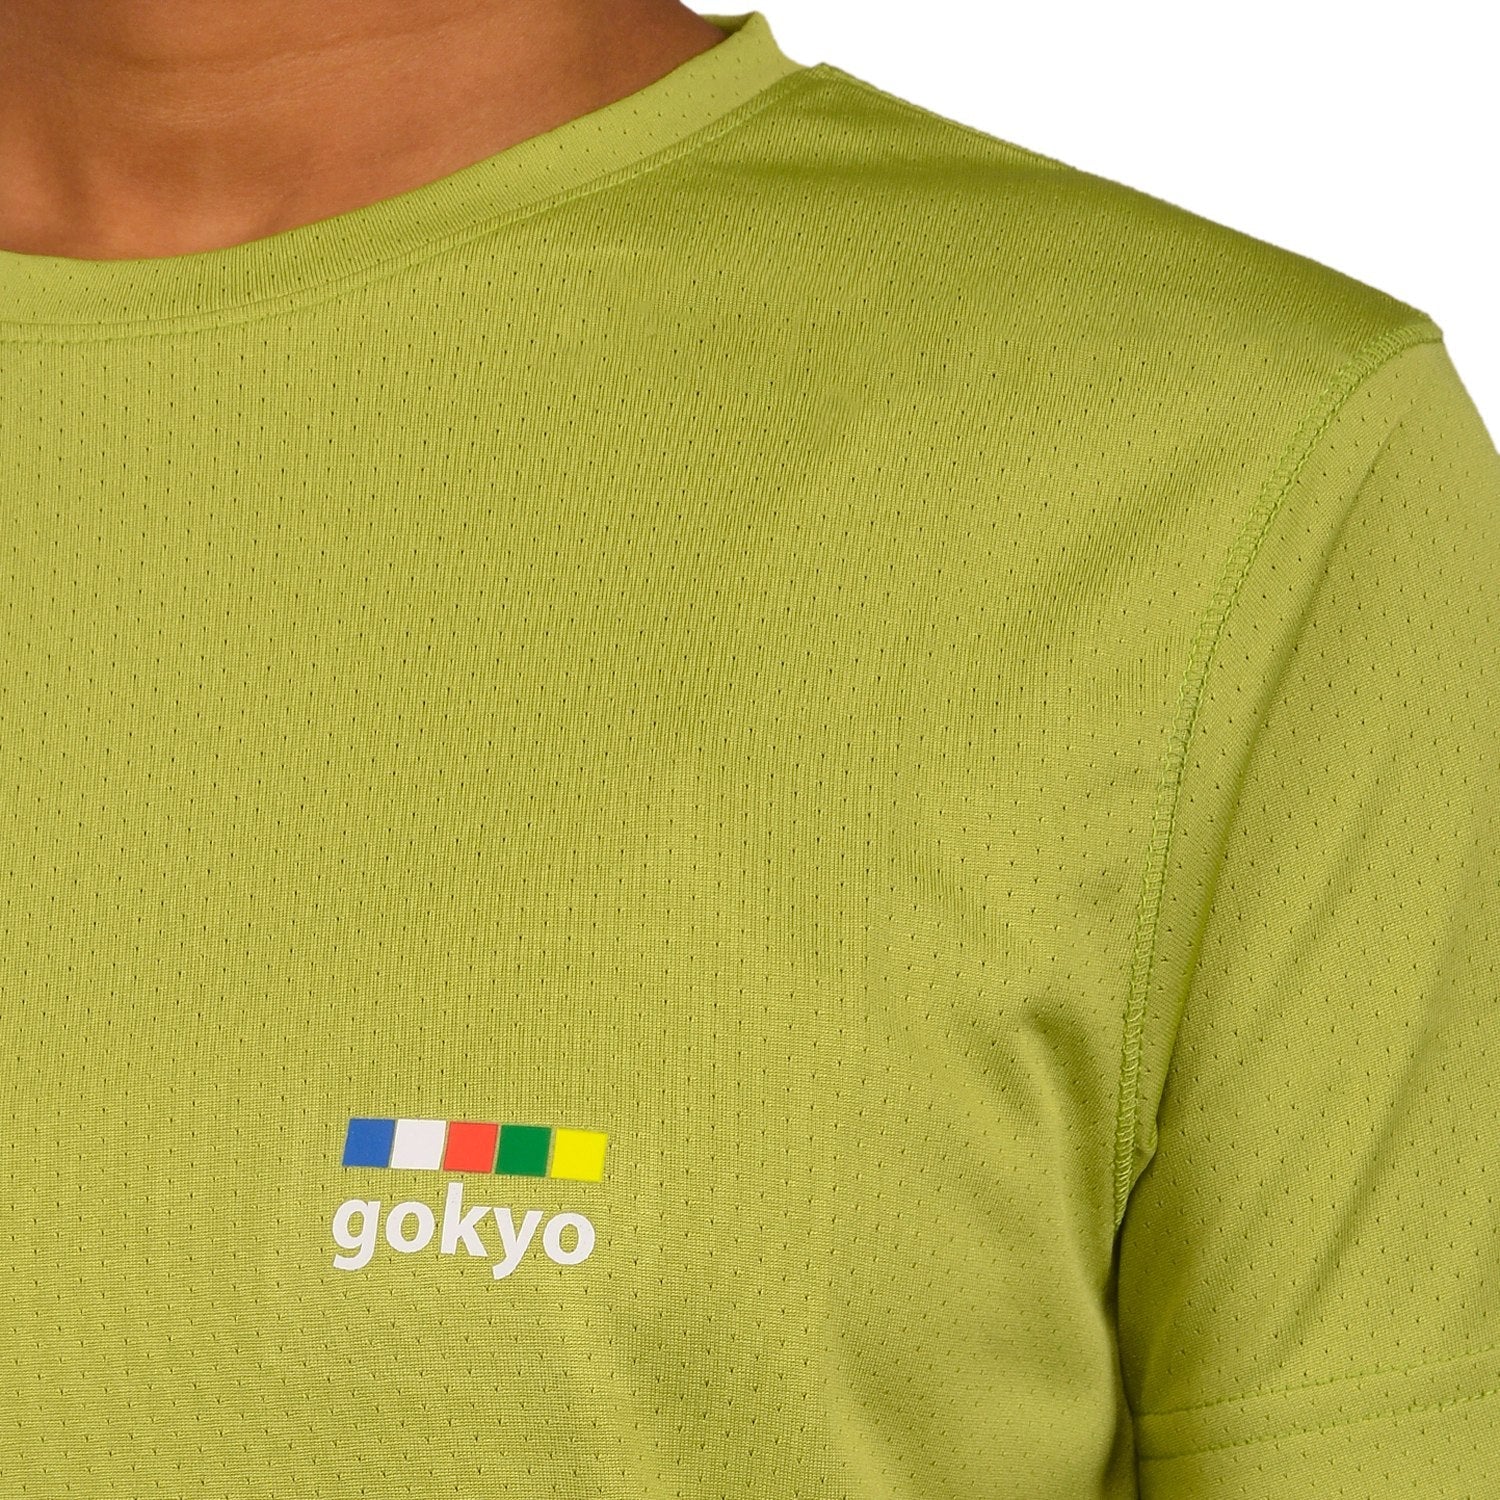 Buy Gokyo Kalimpong Activewear DryFit Tshirt - Women | Trekking & Hiking T-shirts at Gokyo Outdoor Clothing & Gear